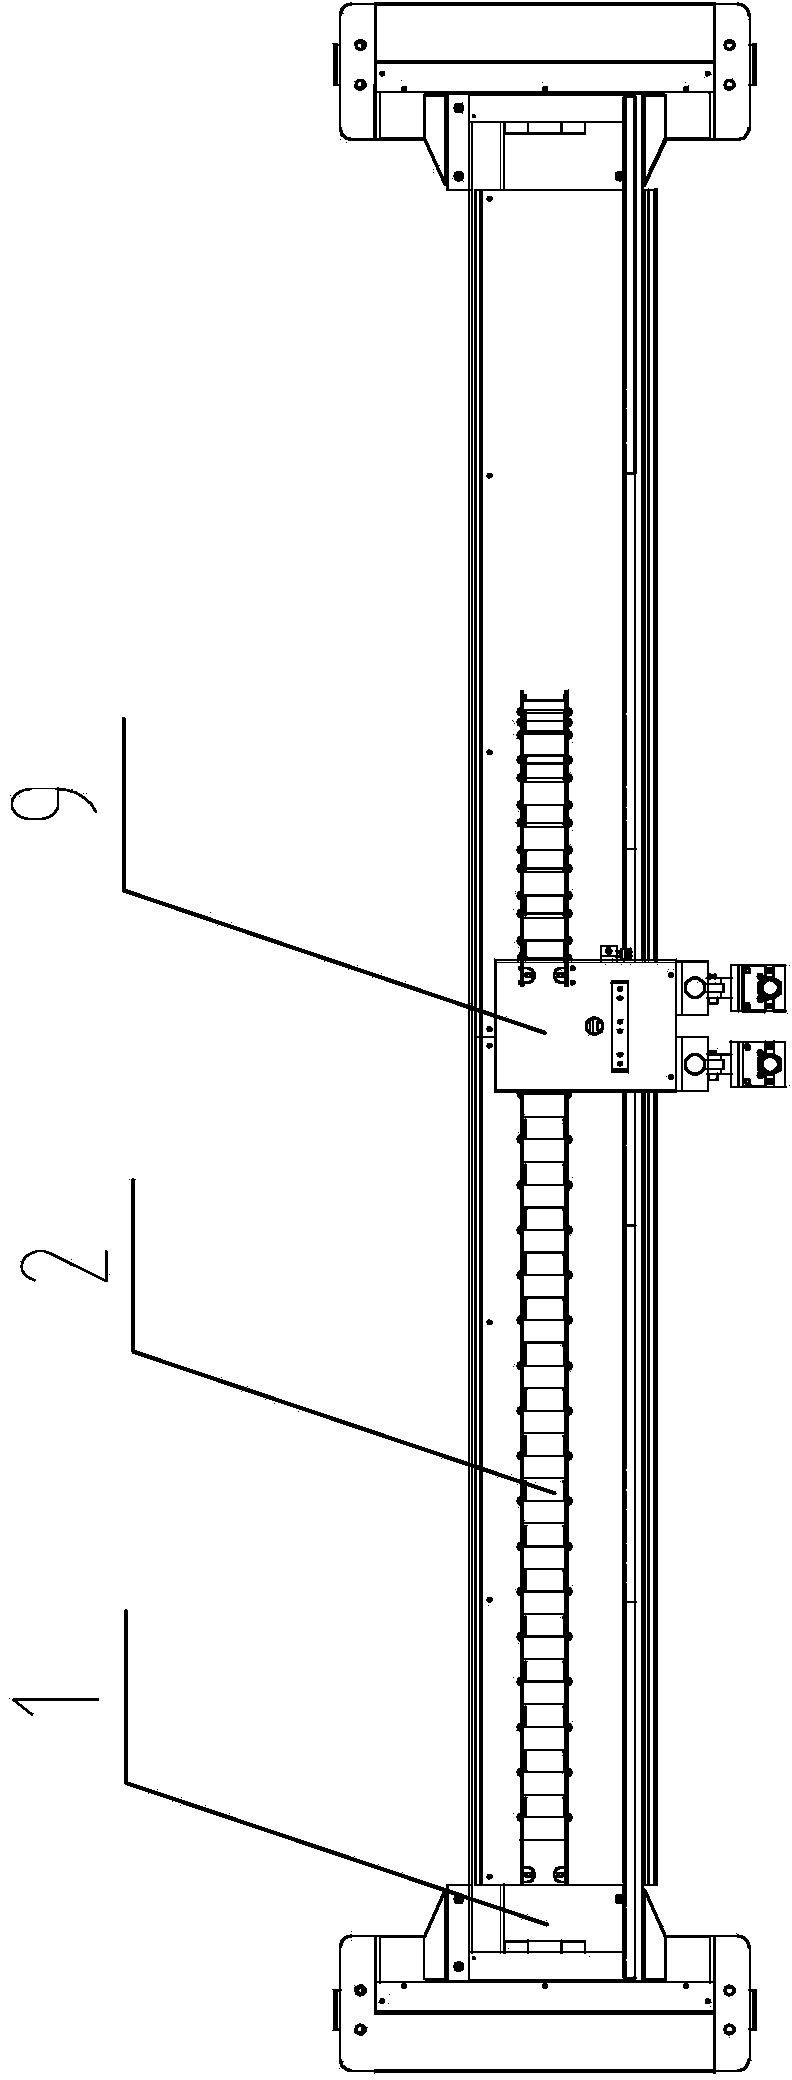 Medium-sized numerical-control gantry structure